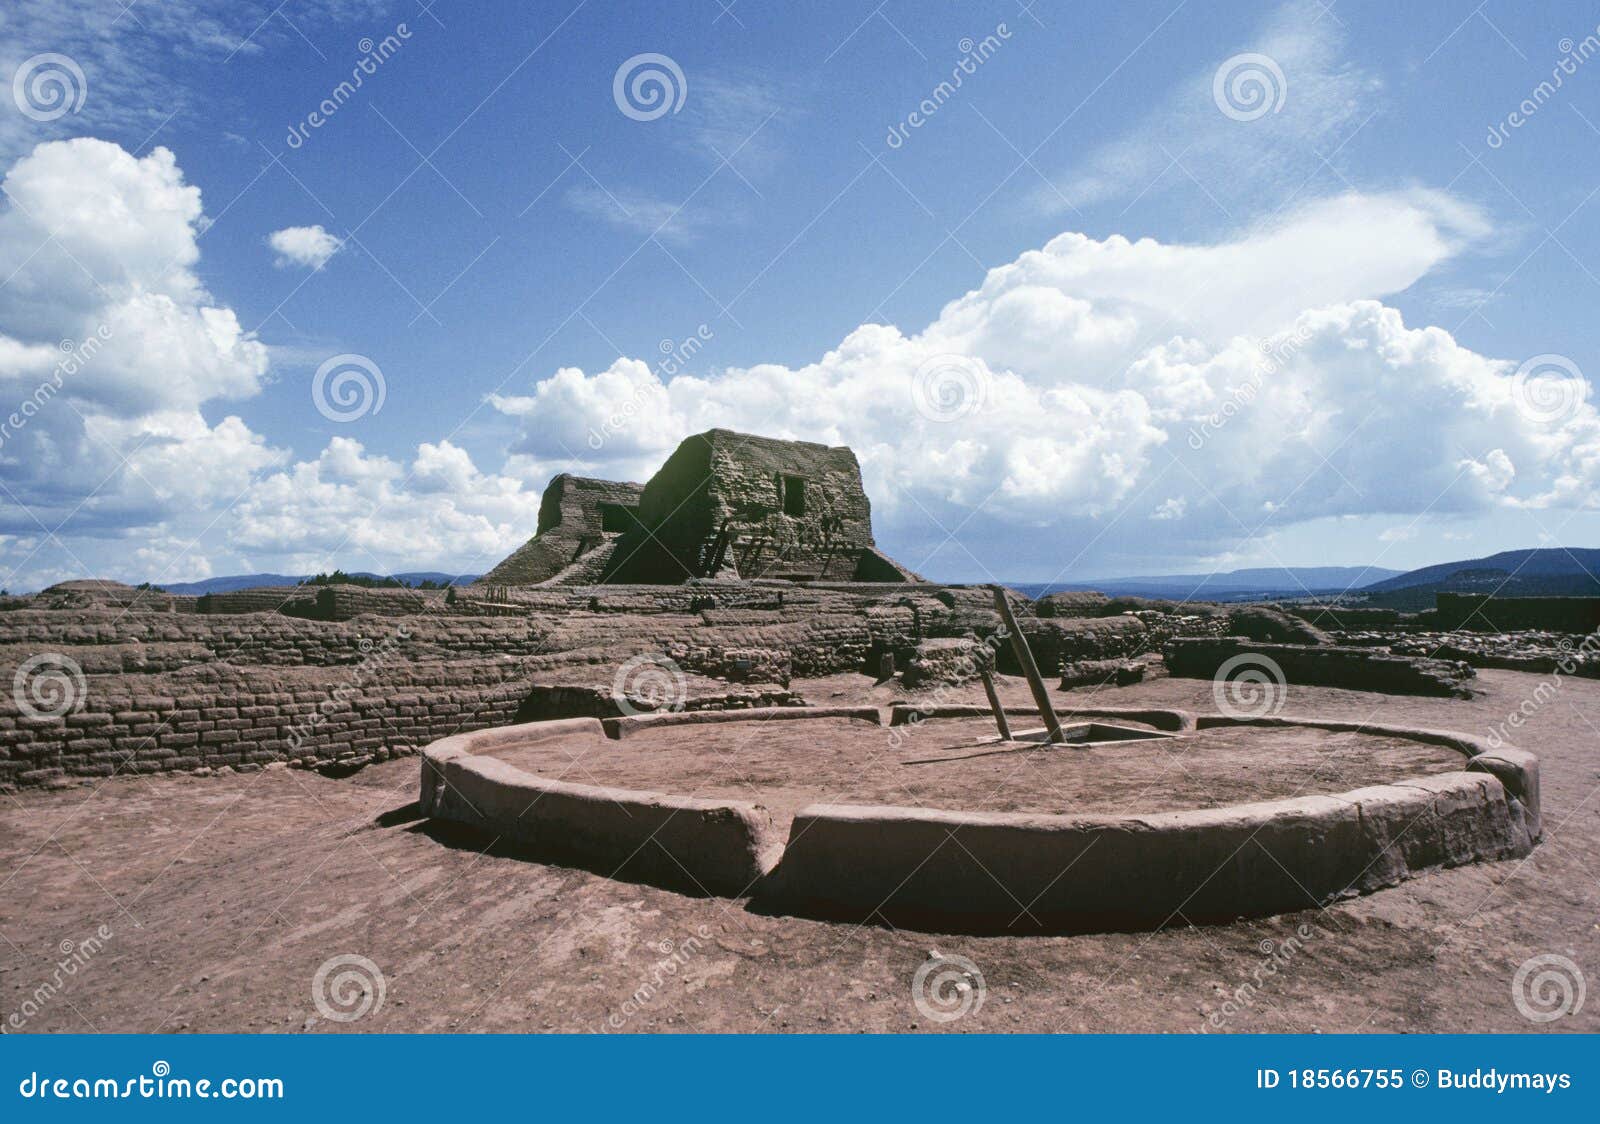 pecos national historical park